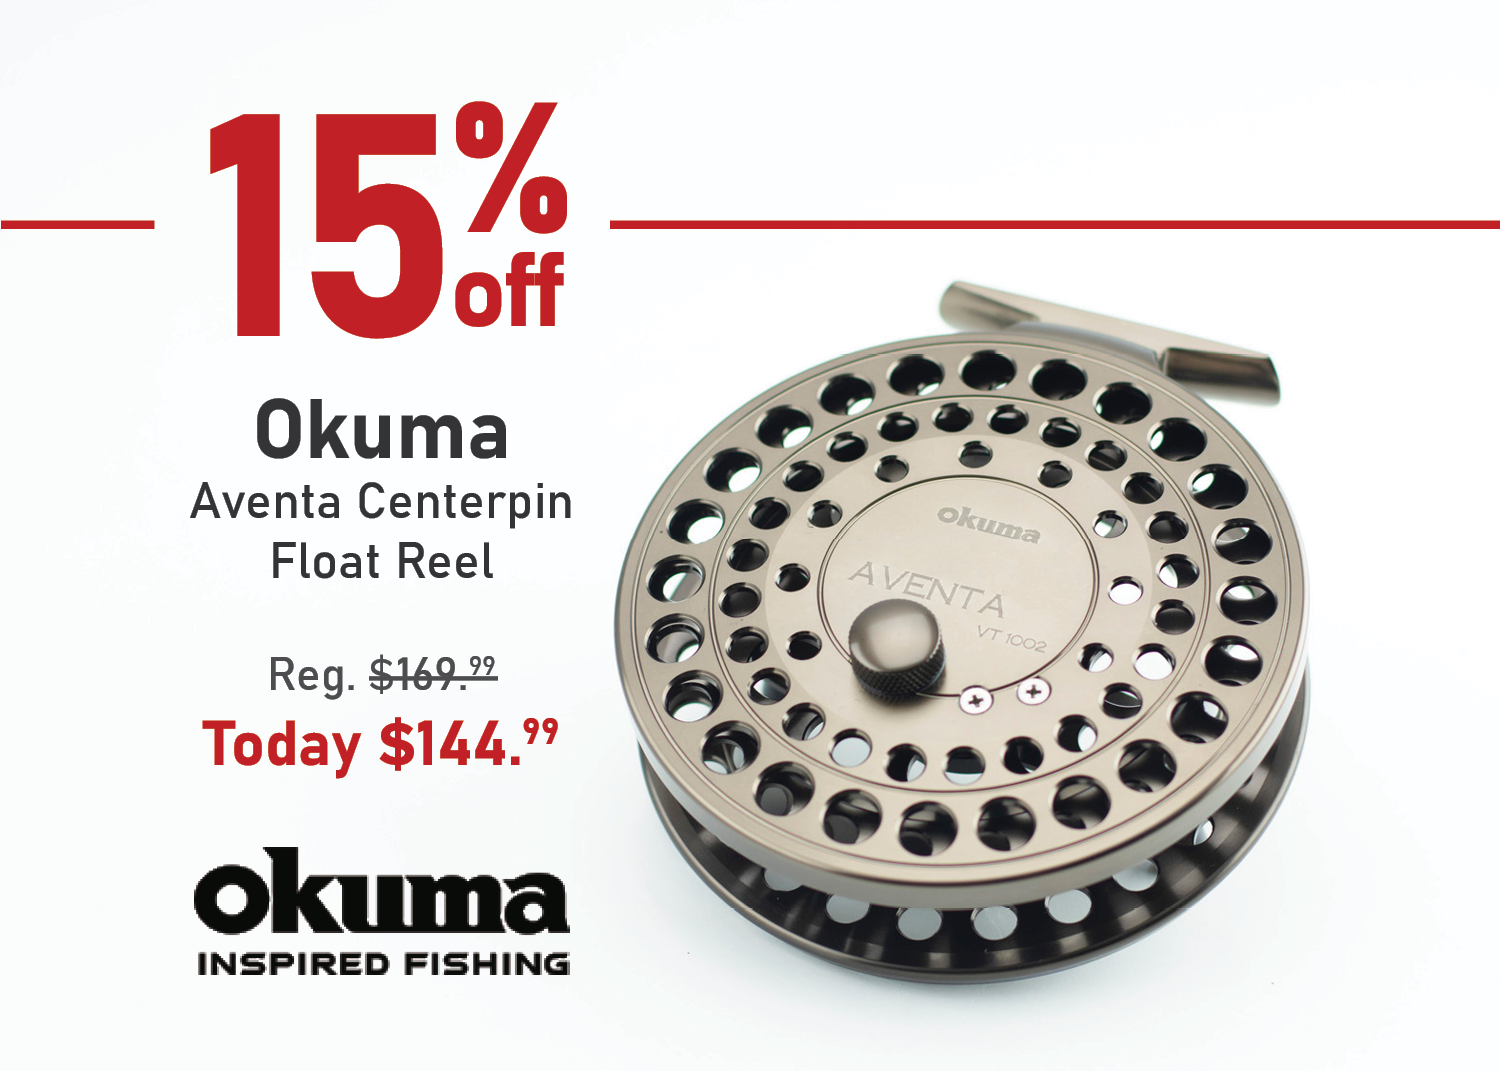 Save 15% on the Okuma Aventa Centerpin Float Reel